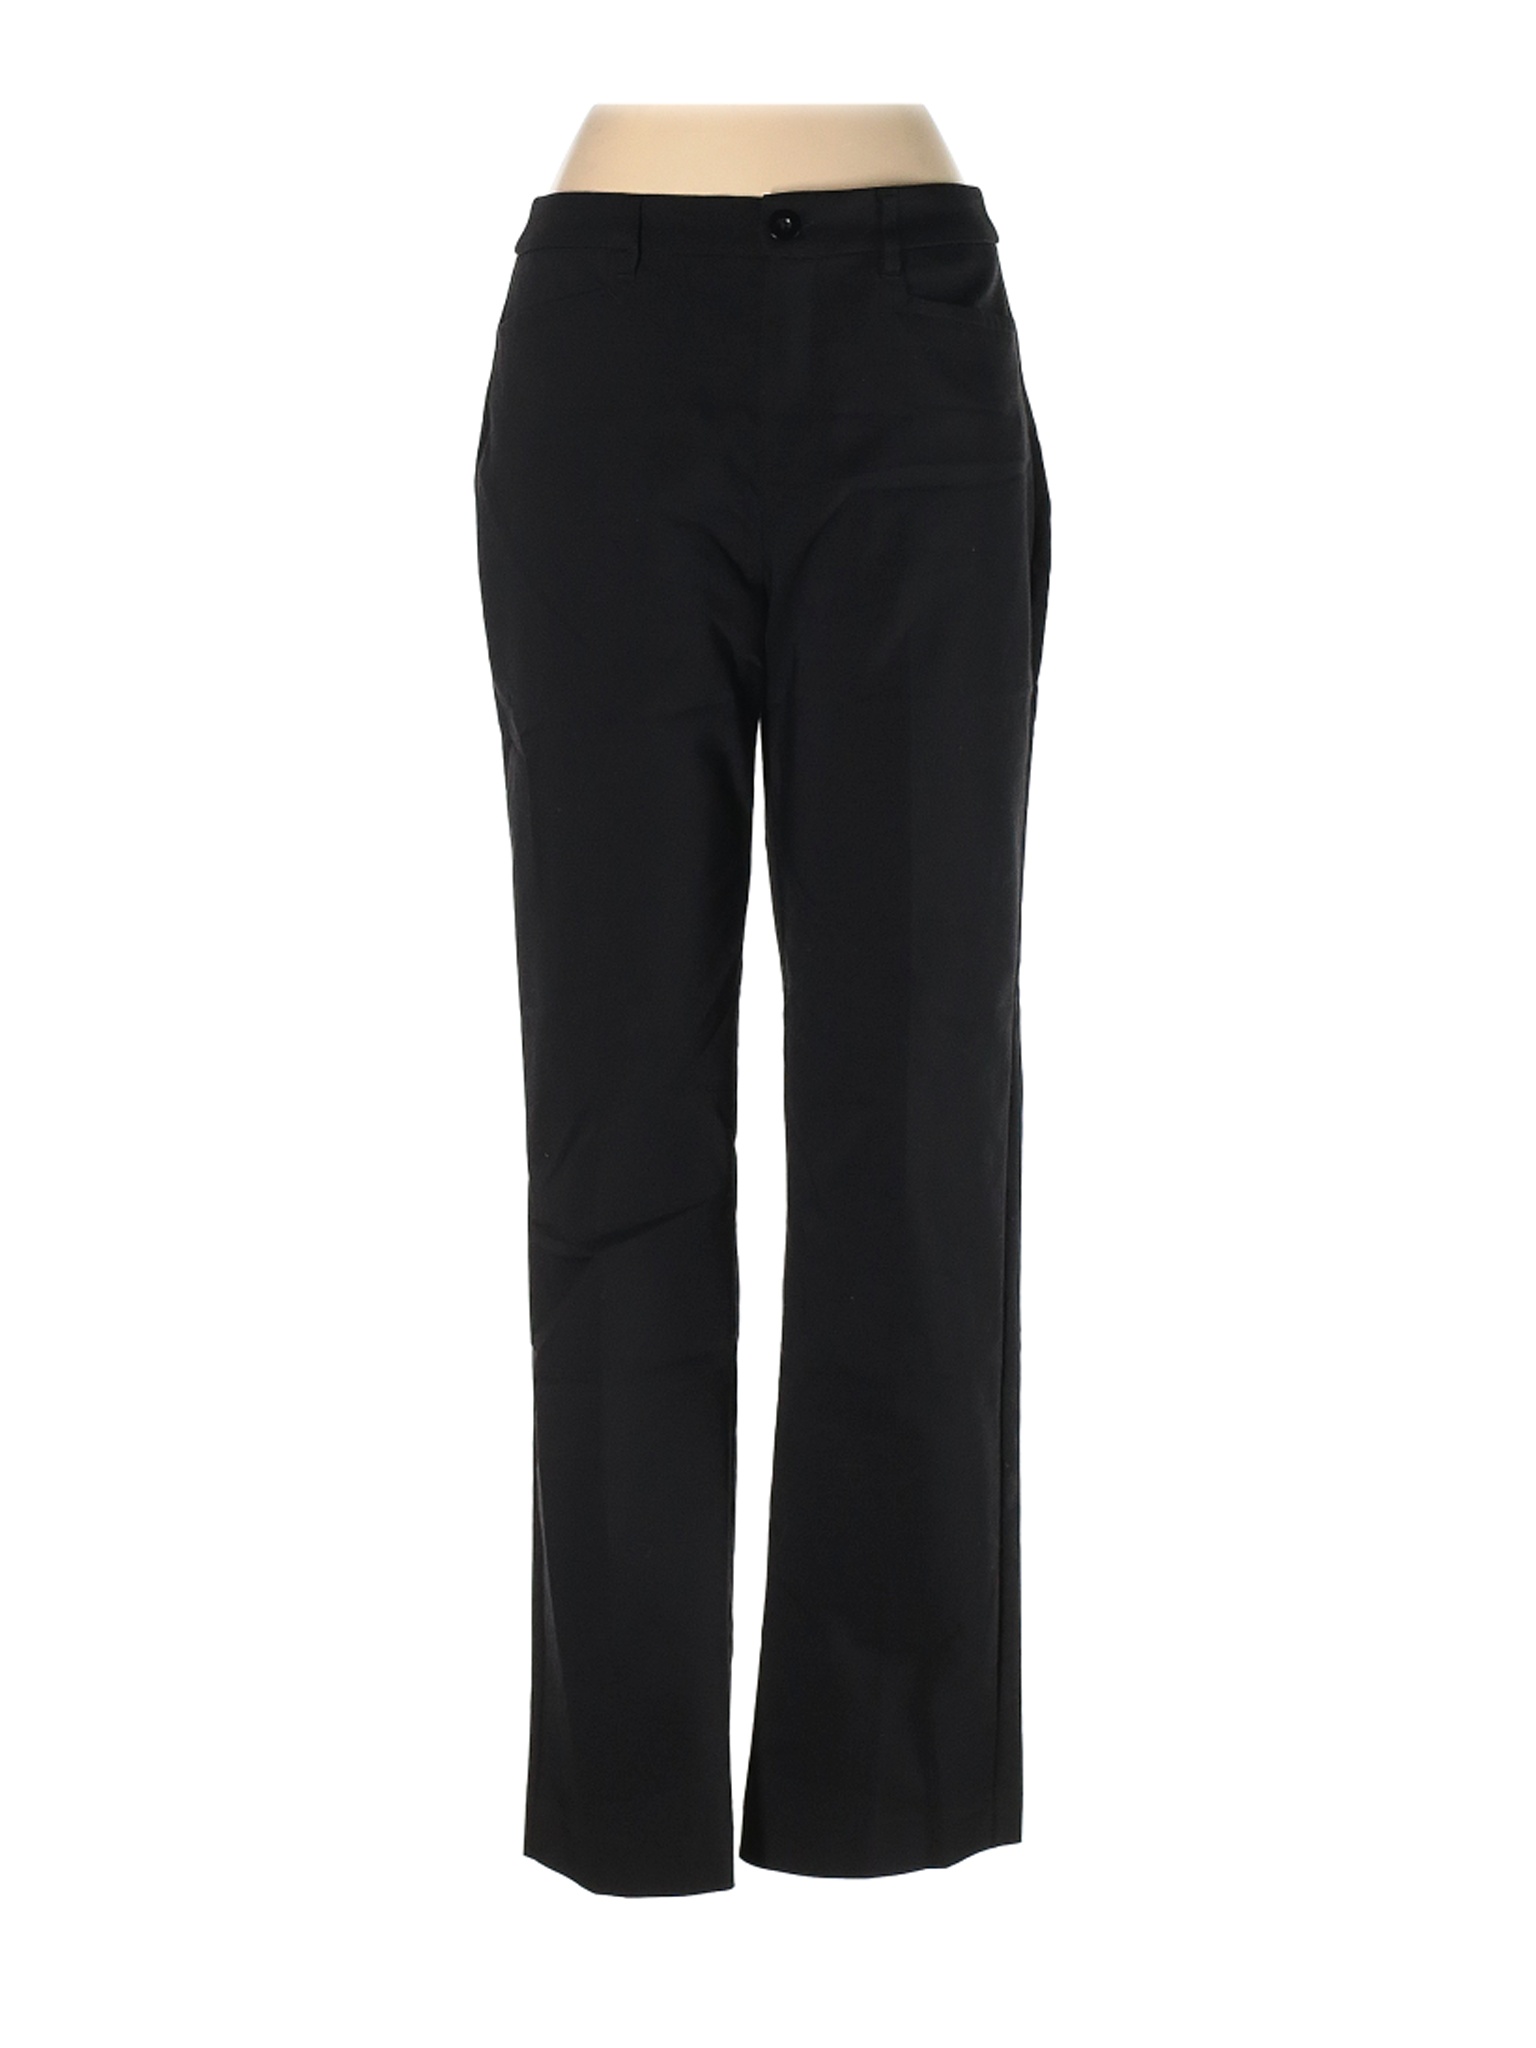 Christopher & Banks Women Black Dress Pants 6 | eBay